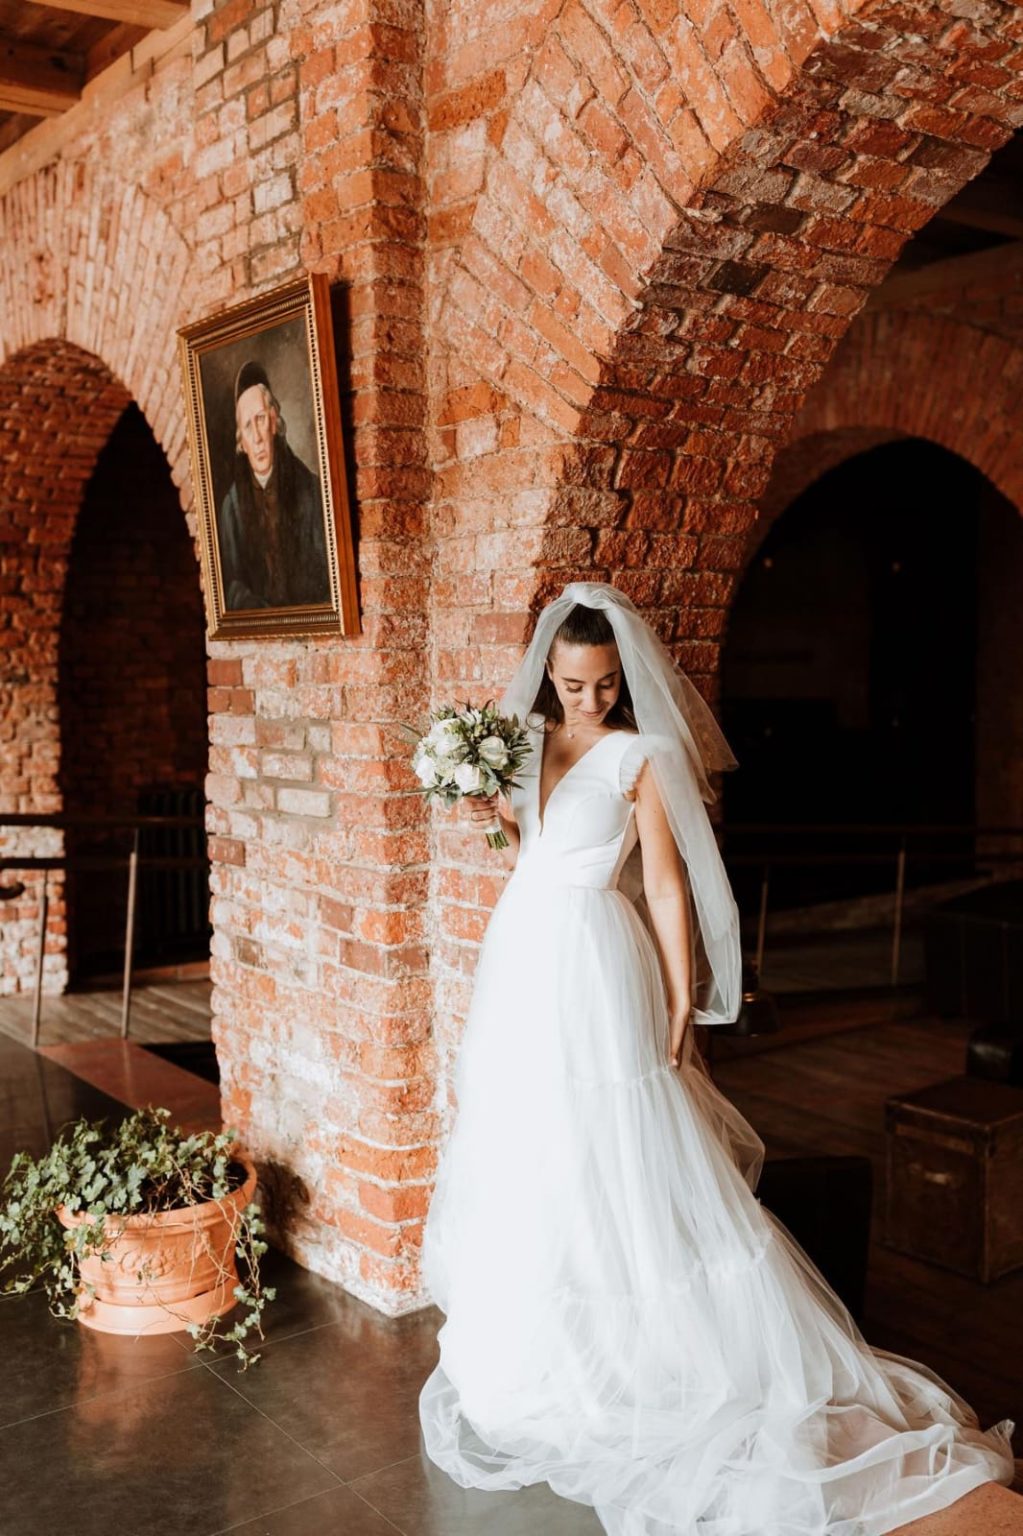 Amelii wedding dress design studio testimonials - Noemi